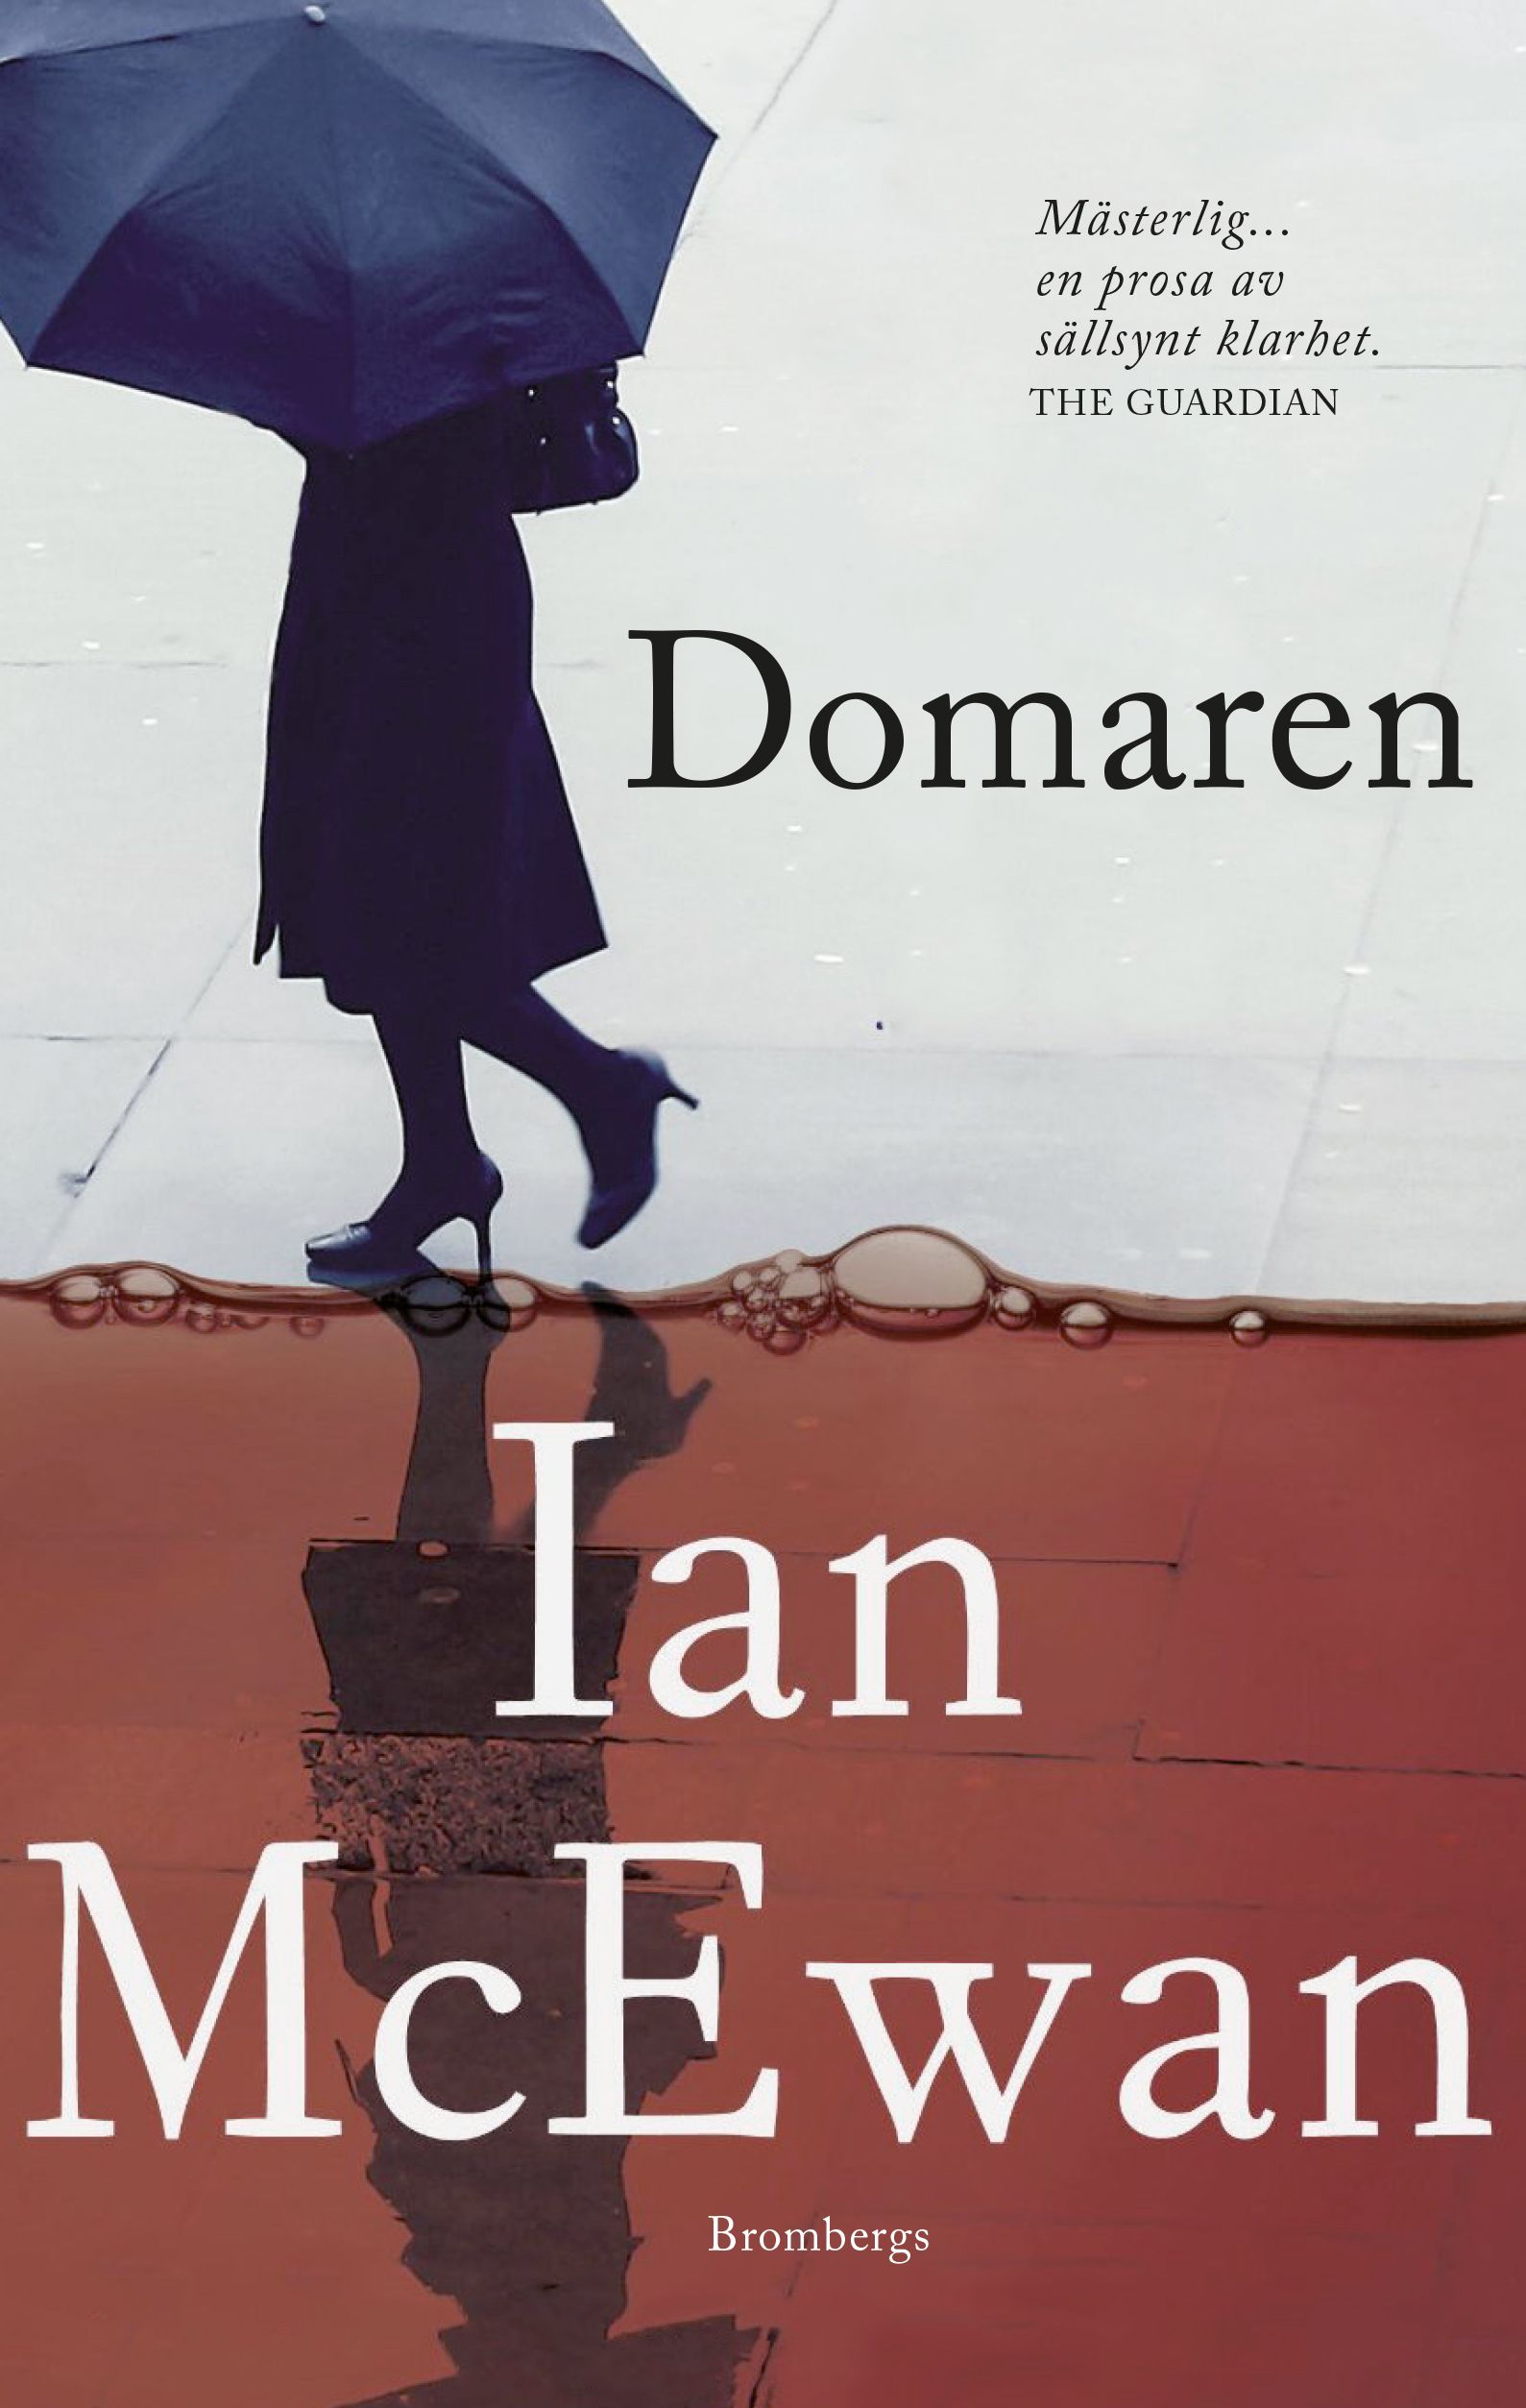 Domaren, eBook by Ian McEwan